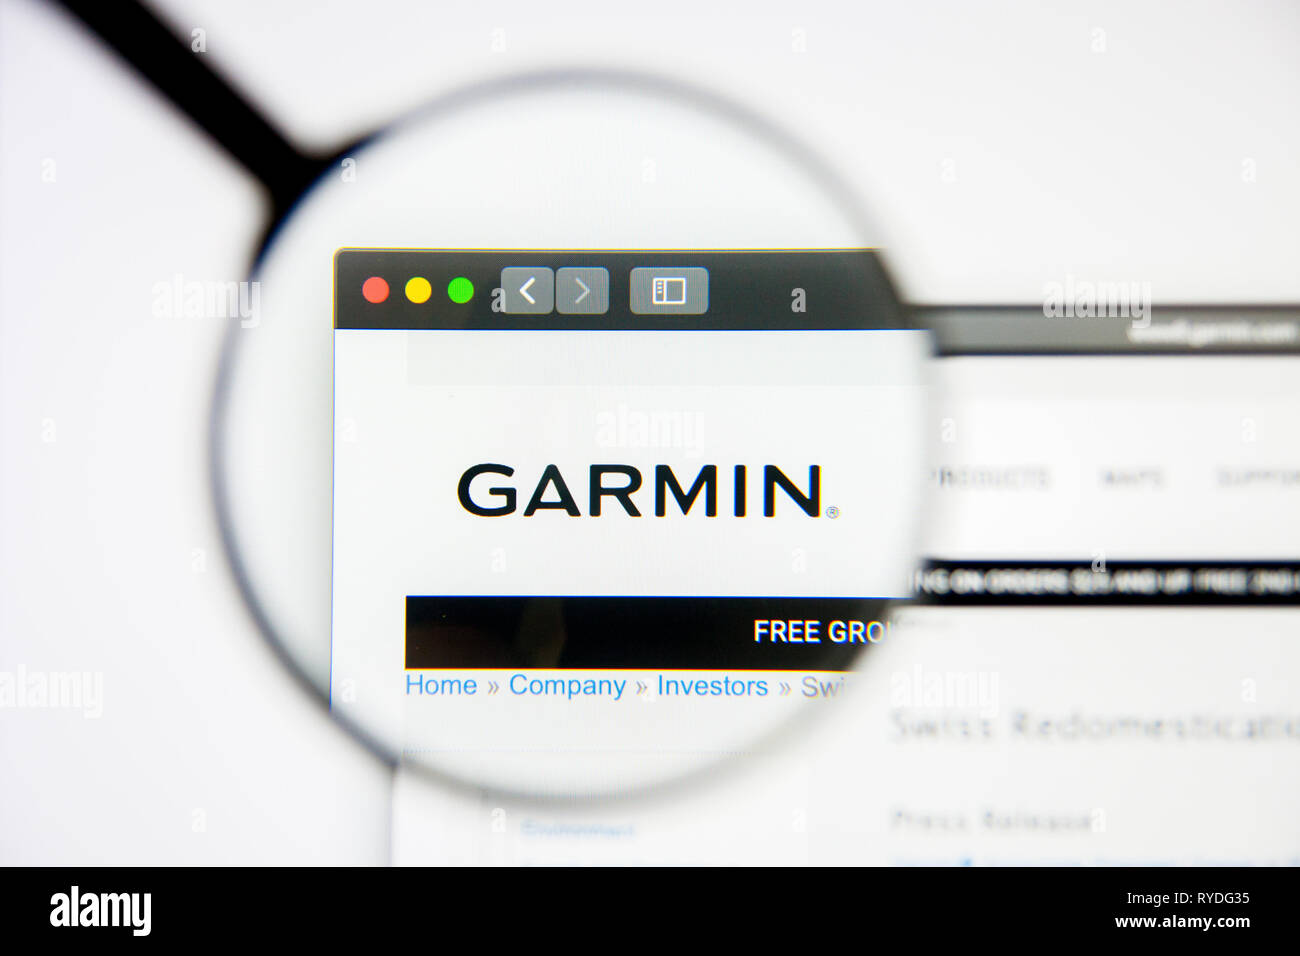 Los Angeles, Kalifornien, USA - 5. März 2019: Garmin Homepage. Garmin Logo sichtbar auf dem Display, Illustrative Editorial Stockfoto